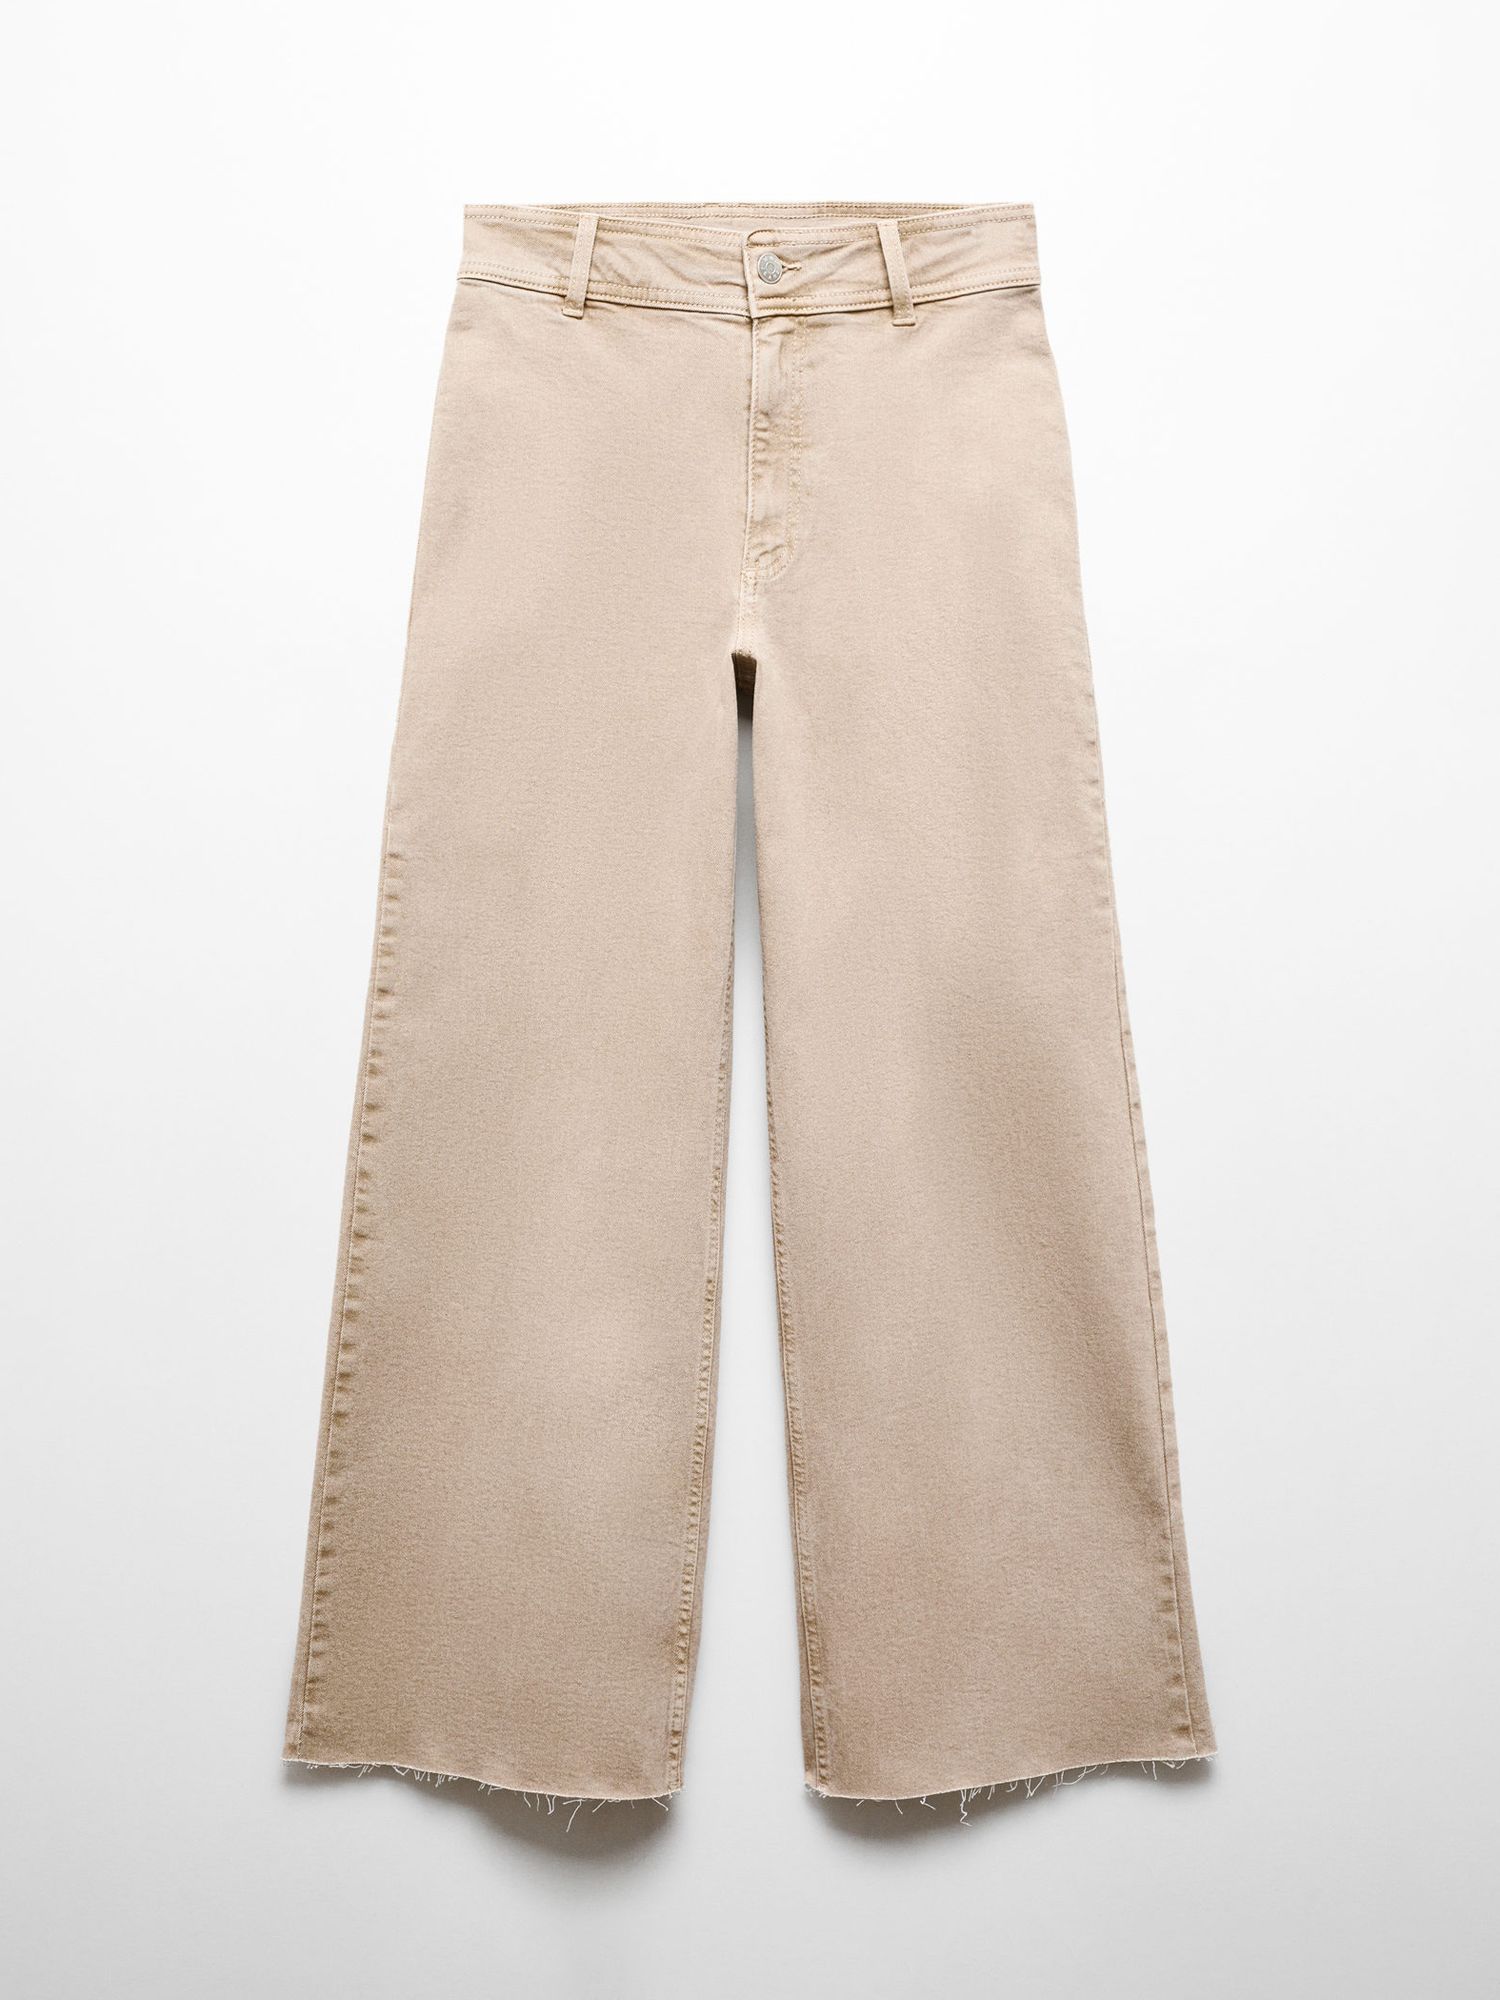 Mango Catherin High Waist Culotte Jeans, Beige, 6